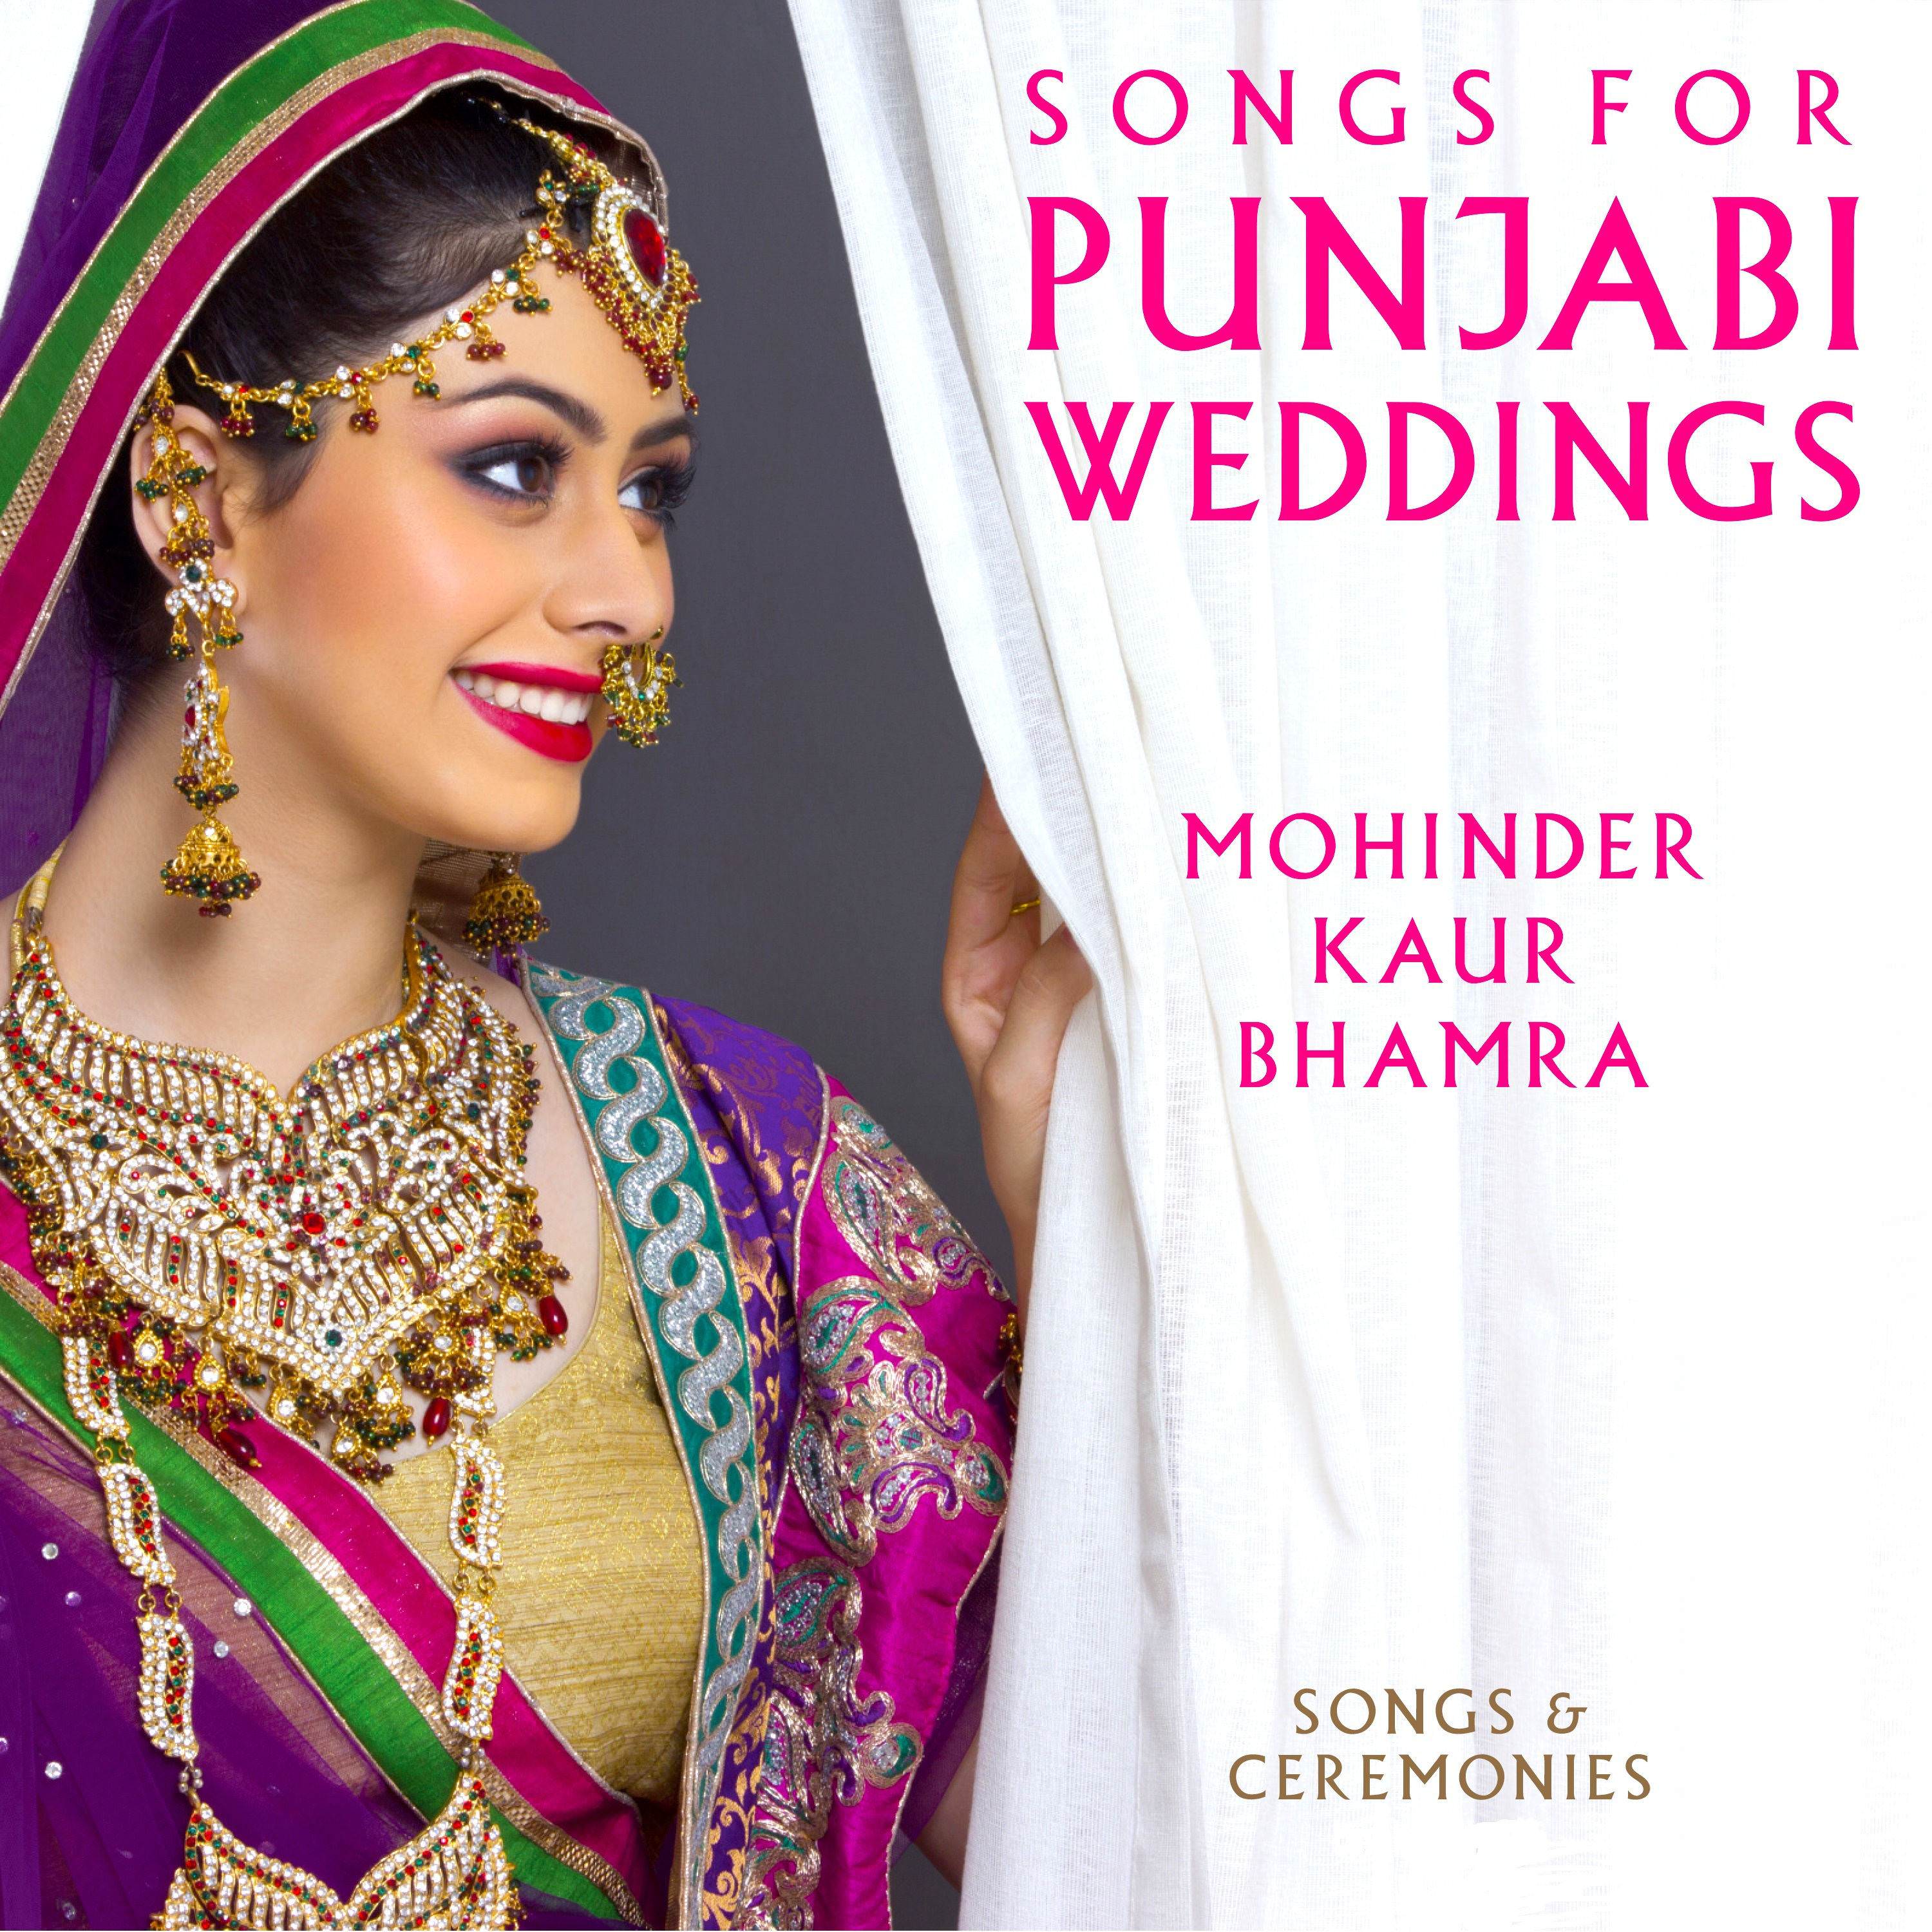 Mohinder Kaur Bhamra – Songs for Punjabi Weddings (Songs & Ceremonies) (2018) [FLAC 24bit/44,1kHz]